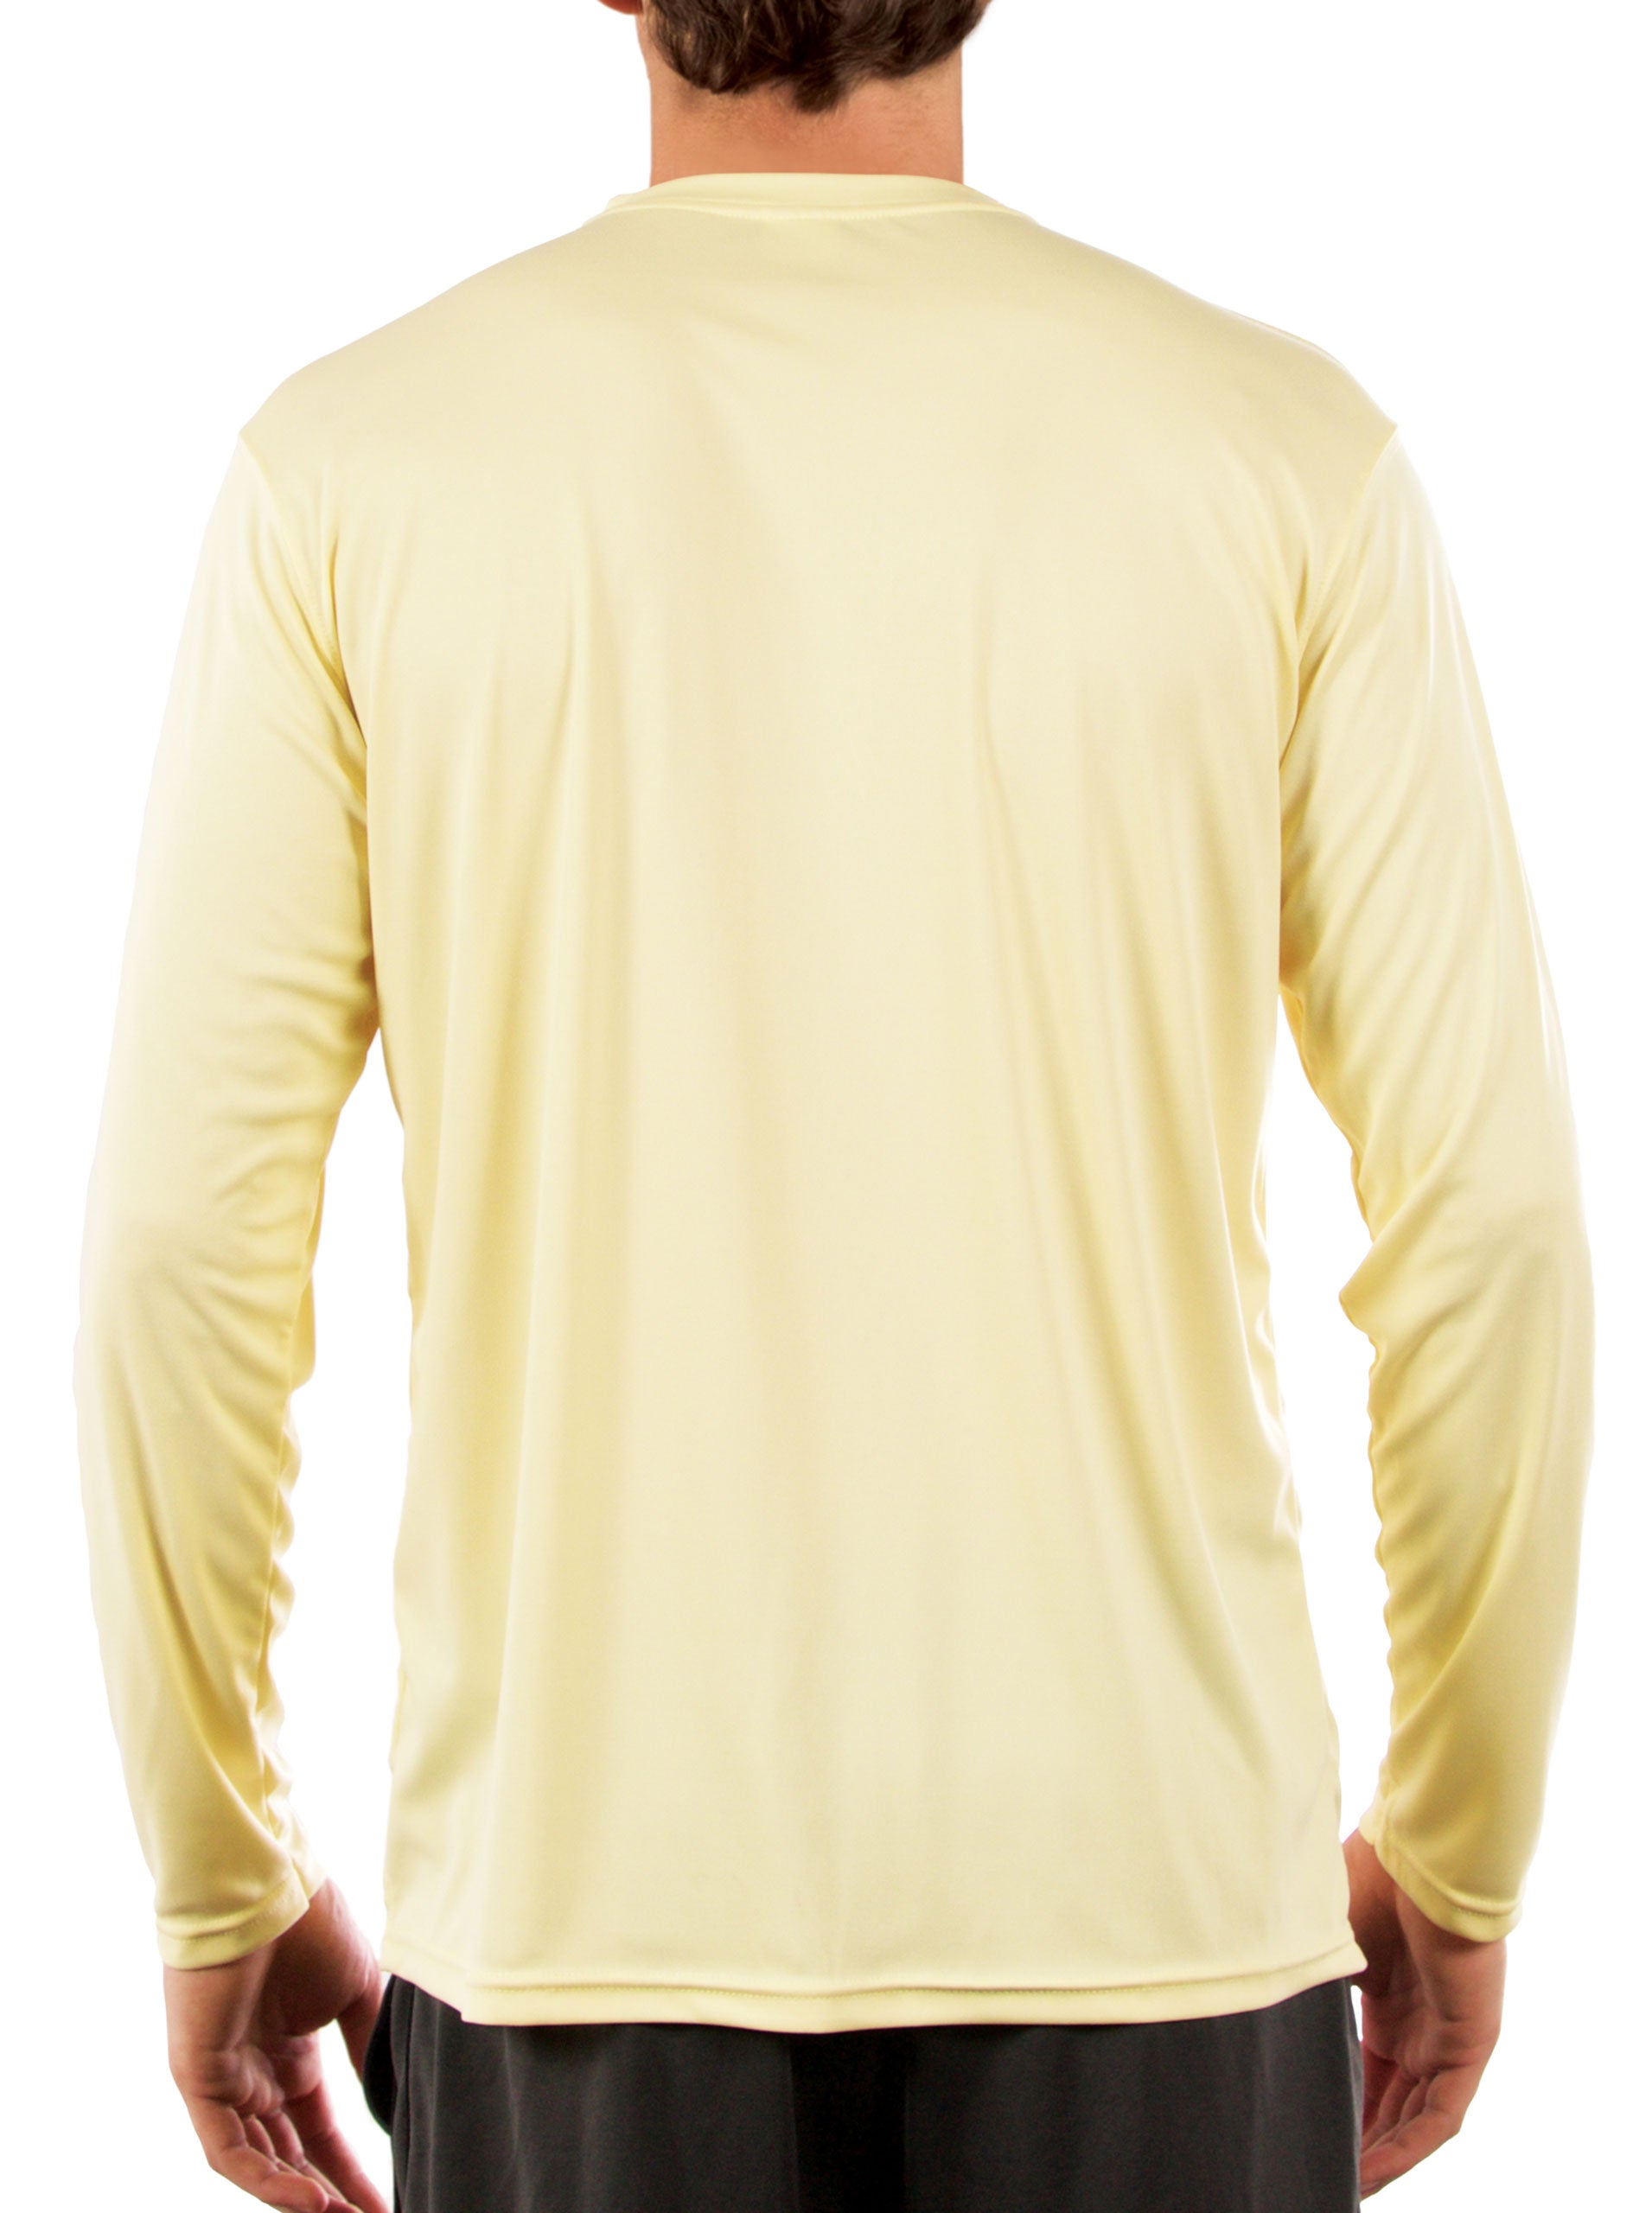 Little Donkey Andy Men's UPF 50+ UV Protection Shirt, Long Sleeve Fishing  Hiking Shirt